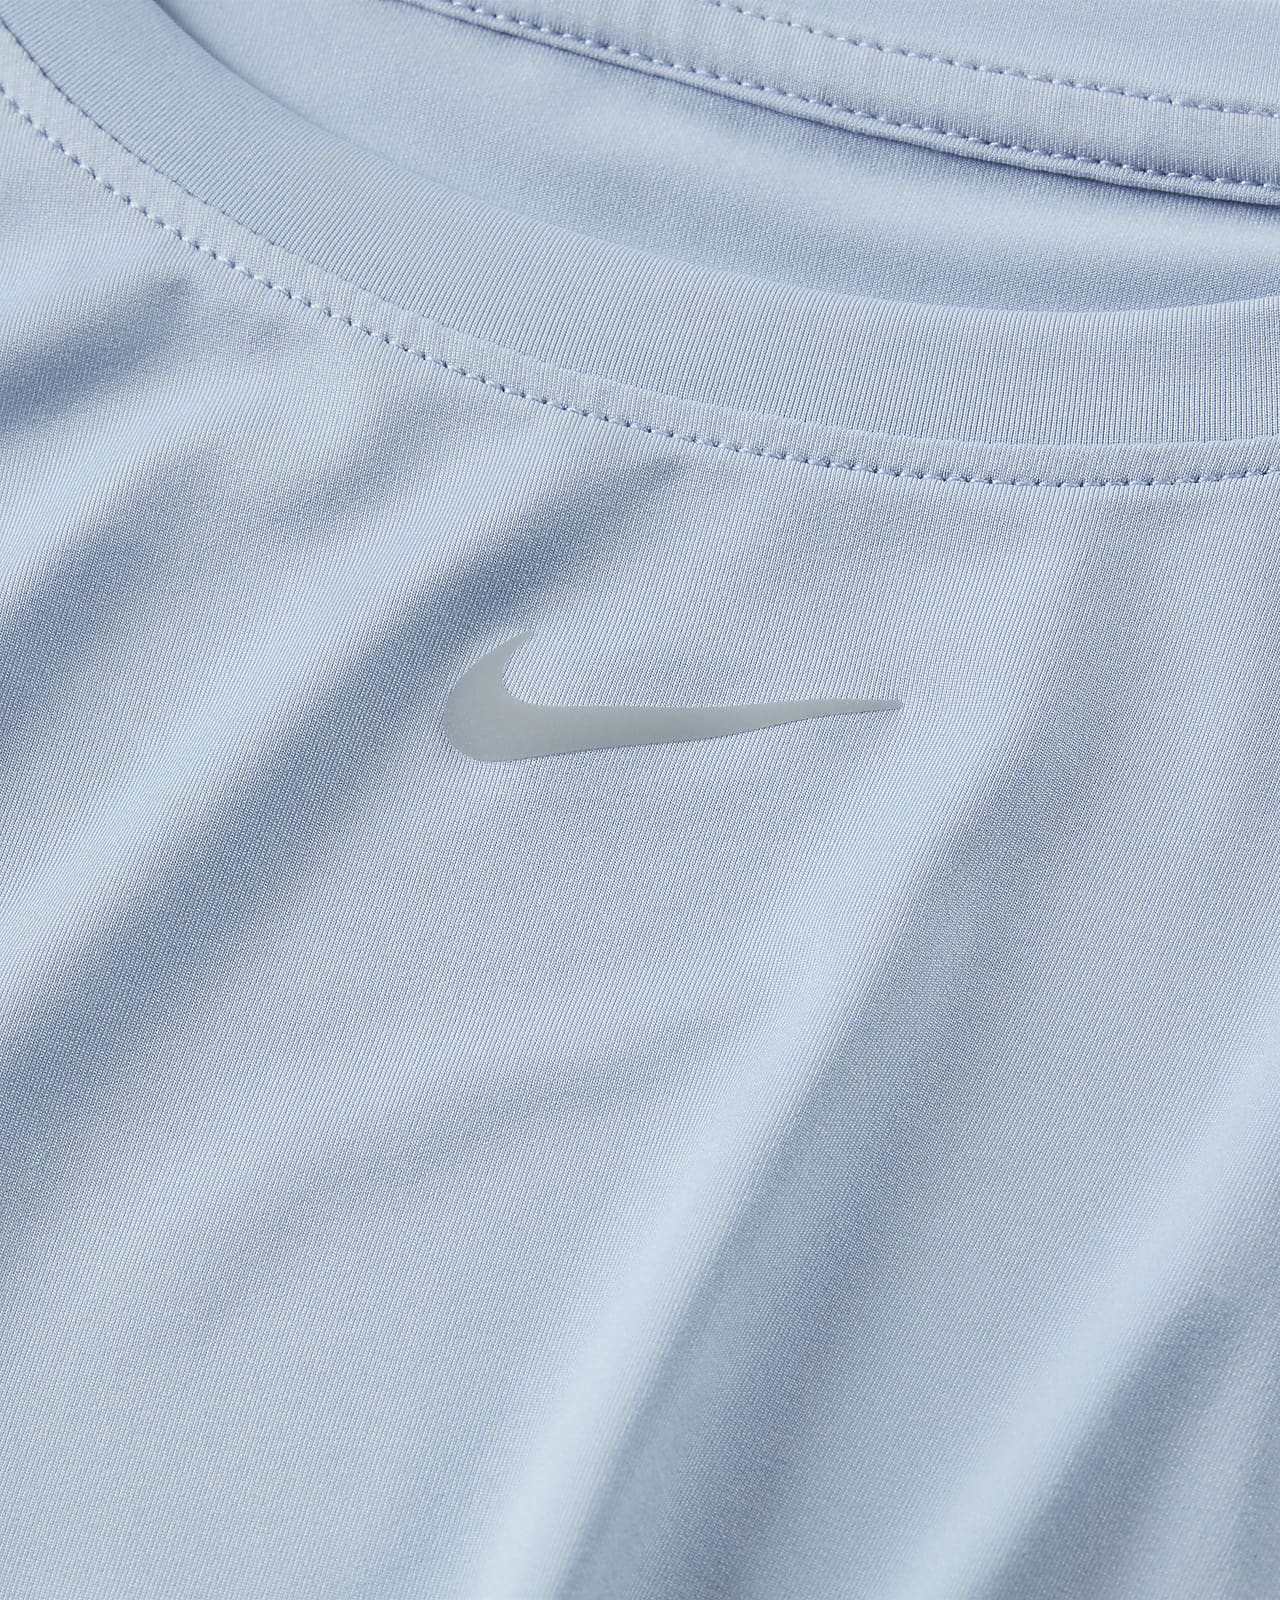 Nike One Classic Women\'s Top. Dri-FIT Short-Sleeve